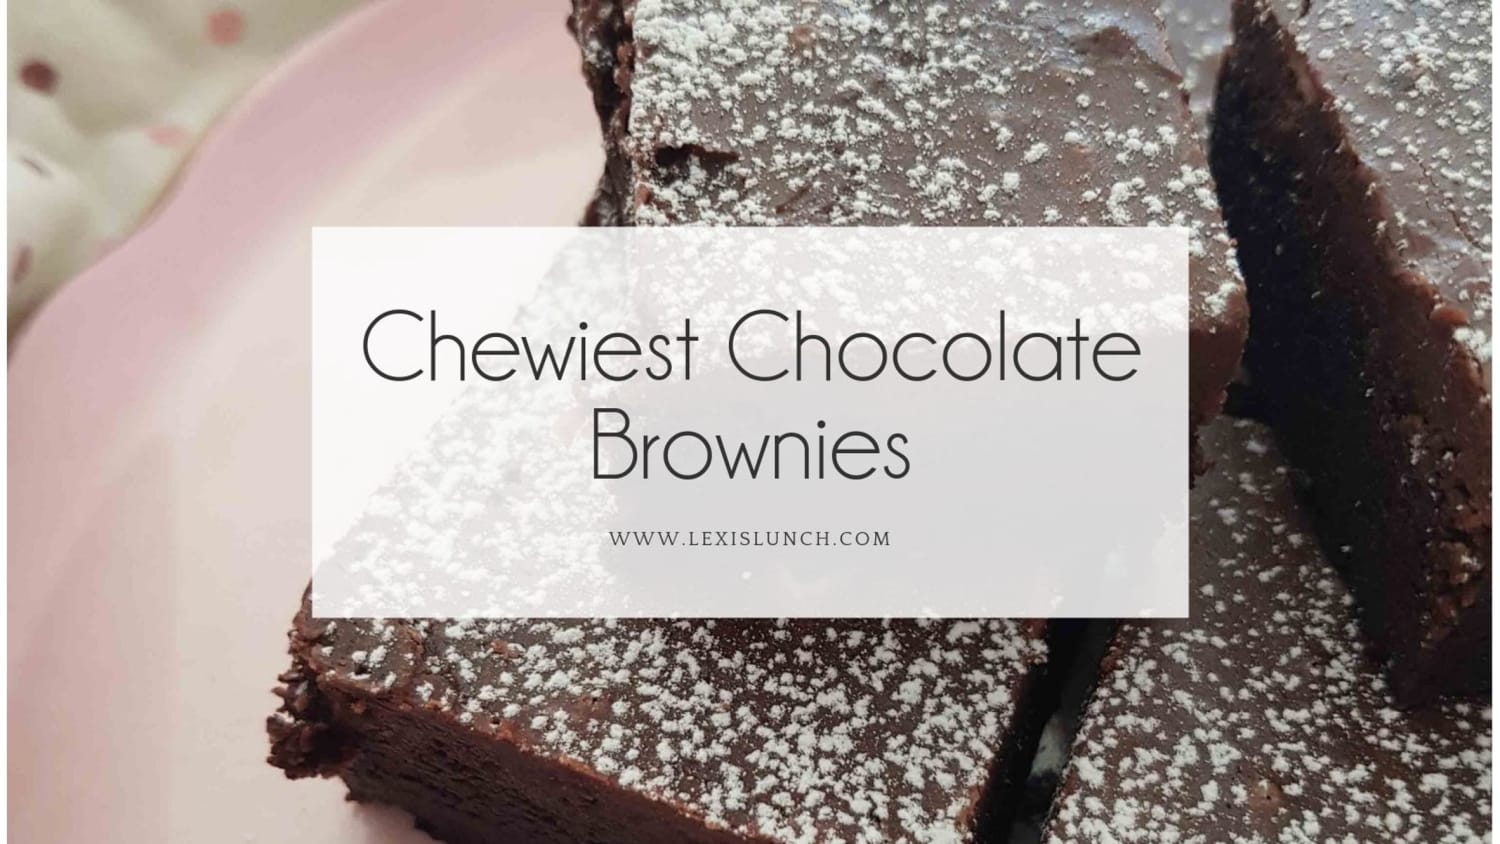 Chewiest Chocolate Brownies